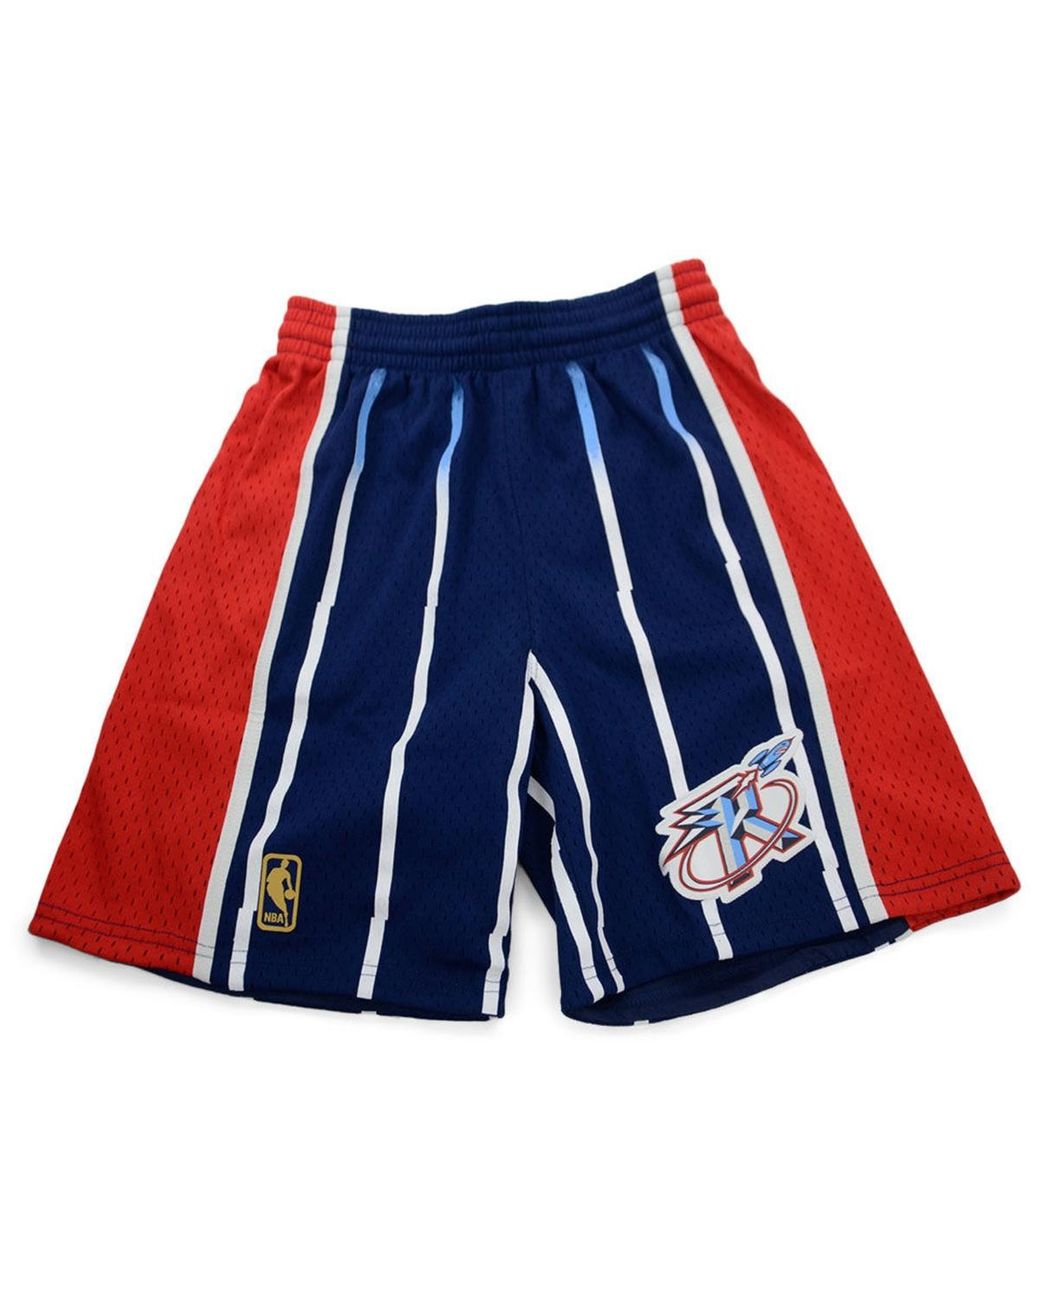 Mitchell & Ness Houston Rockets 1993-94 NBA Swingman Shorts XL